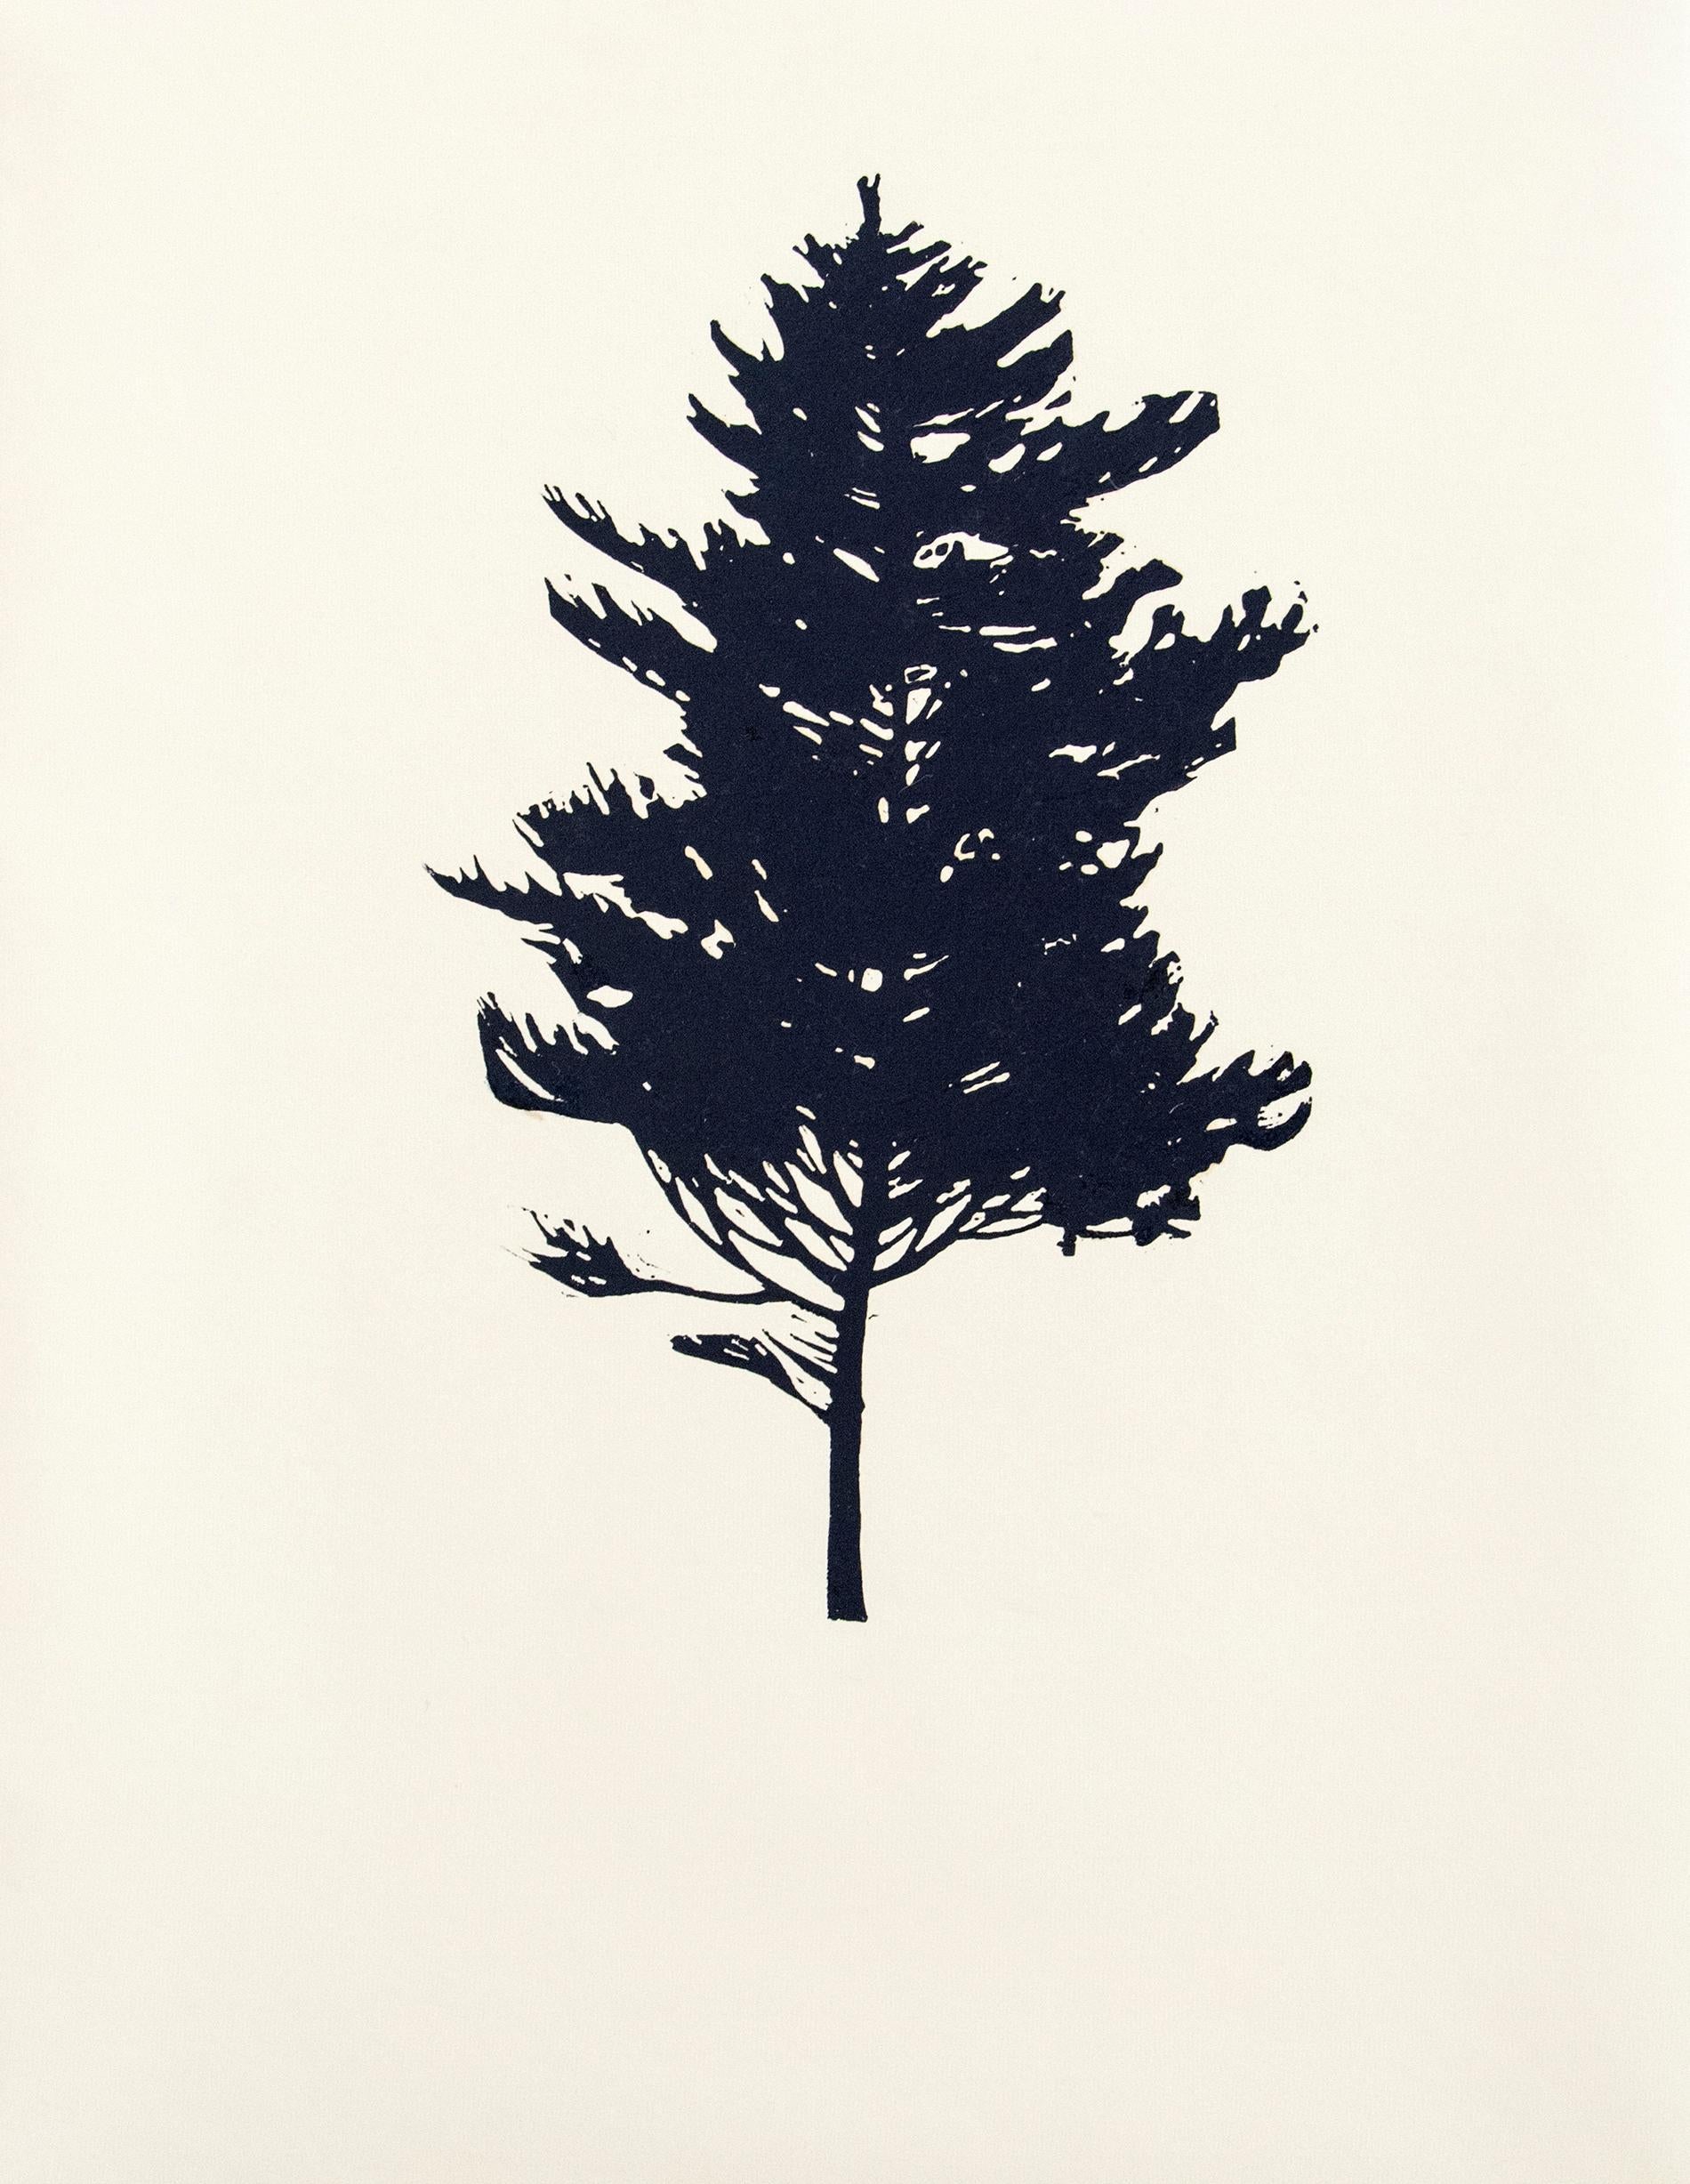 Der Wald  8/12 - portfolio of 9 woodblock prints 5